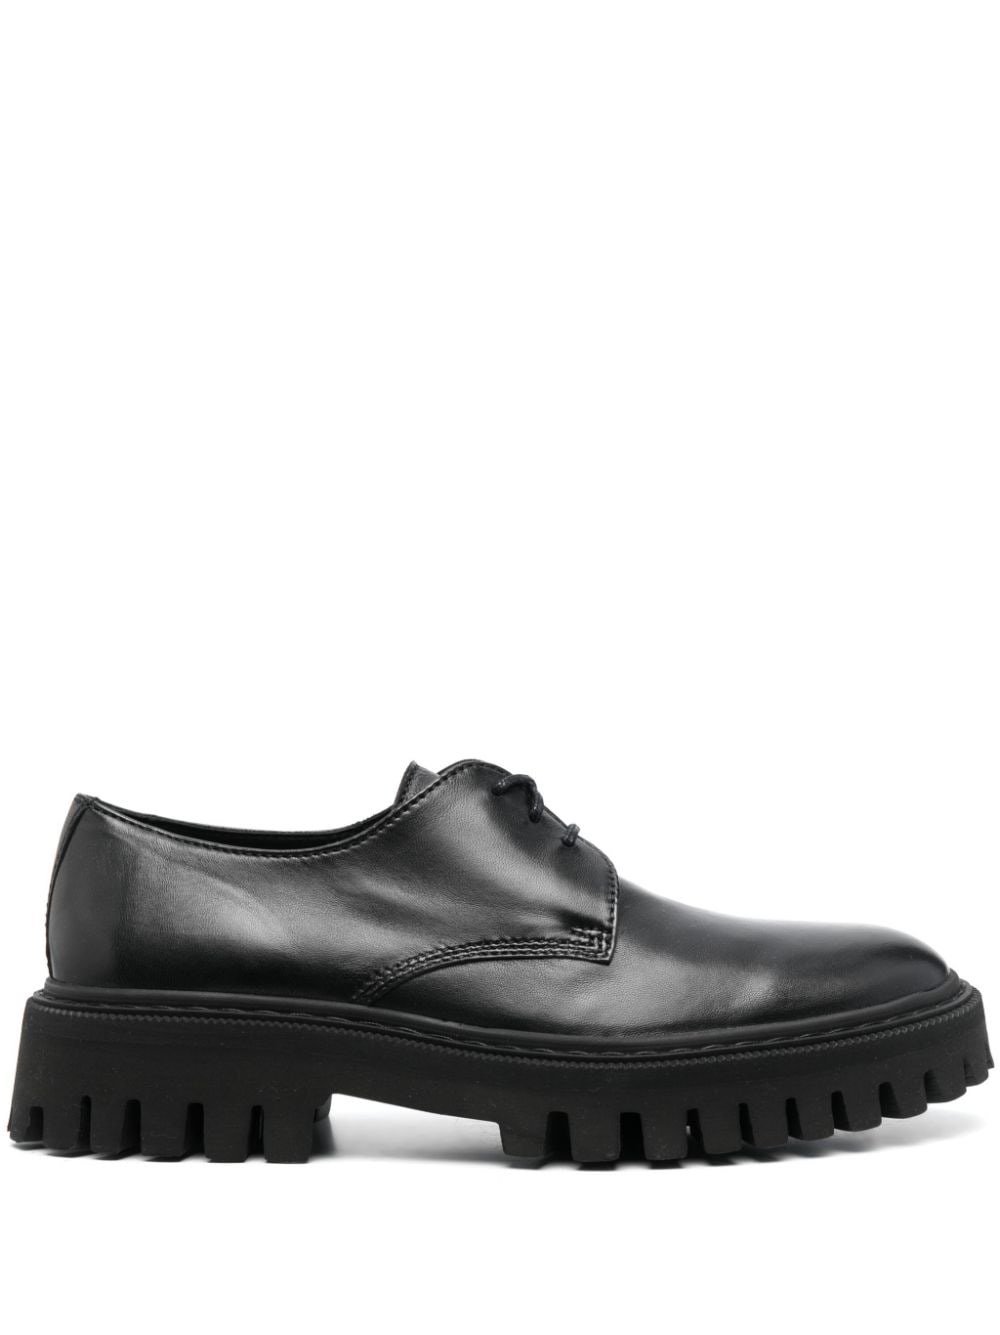 IRO leather derby shoes - Black von IRO